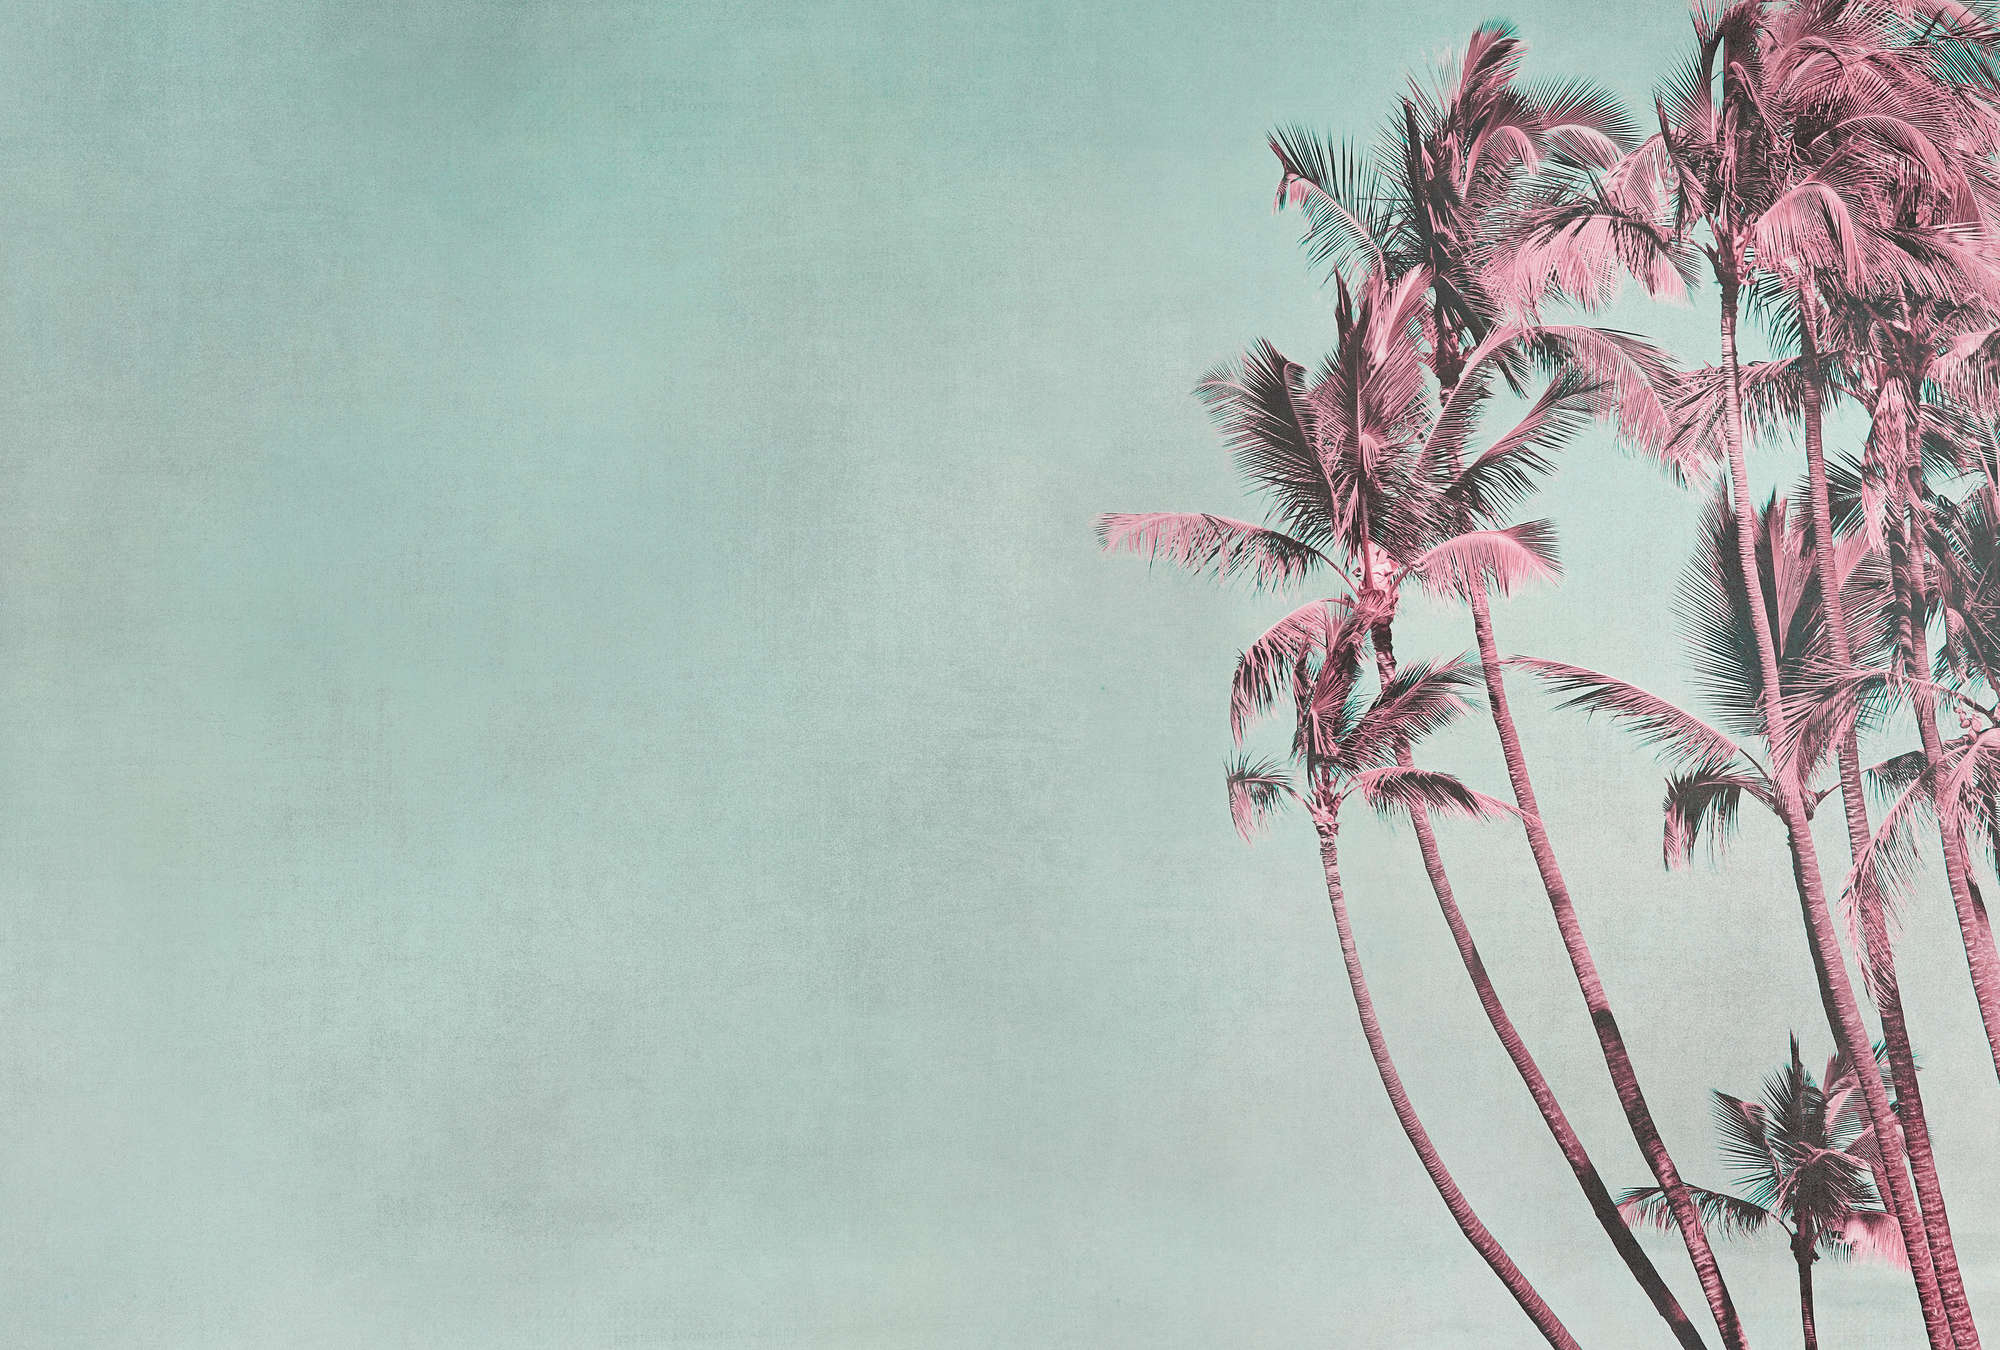             Papel pintado Tropical Breeze Palm en turquesa y rosa
        